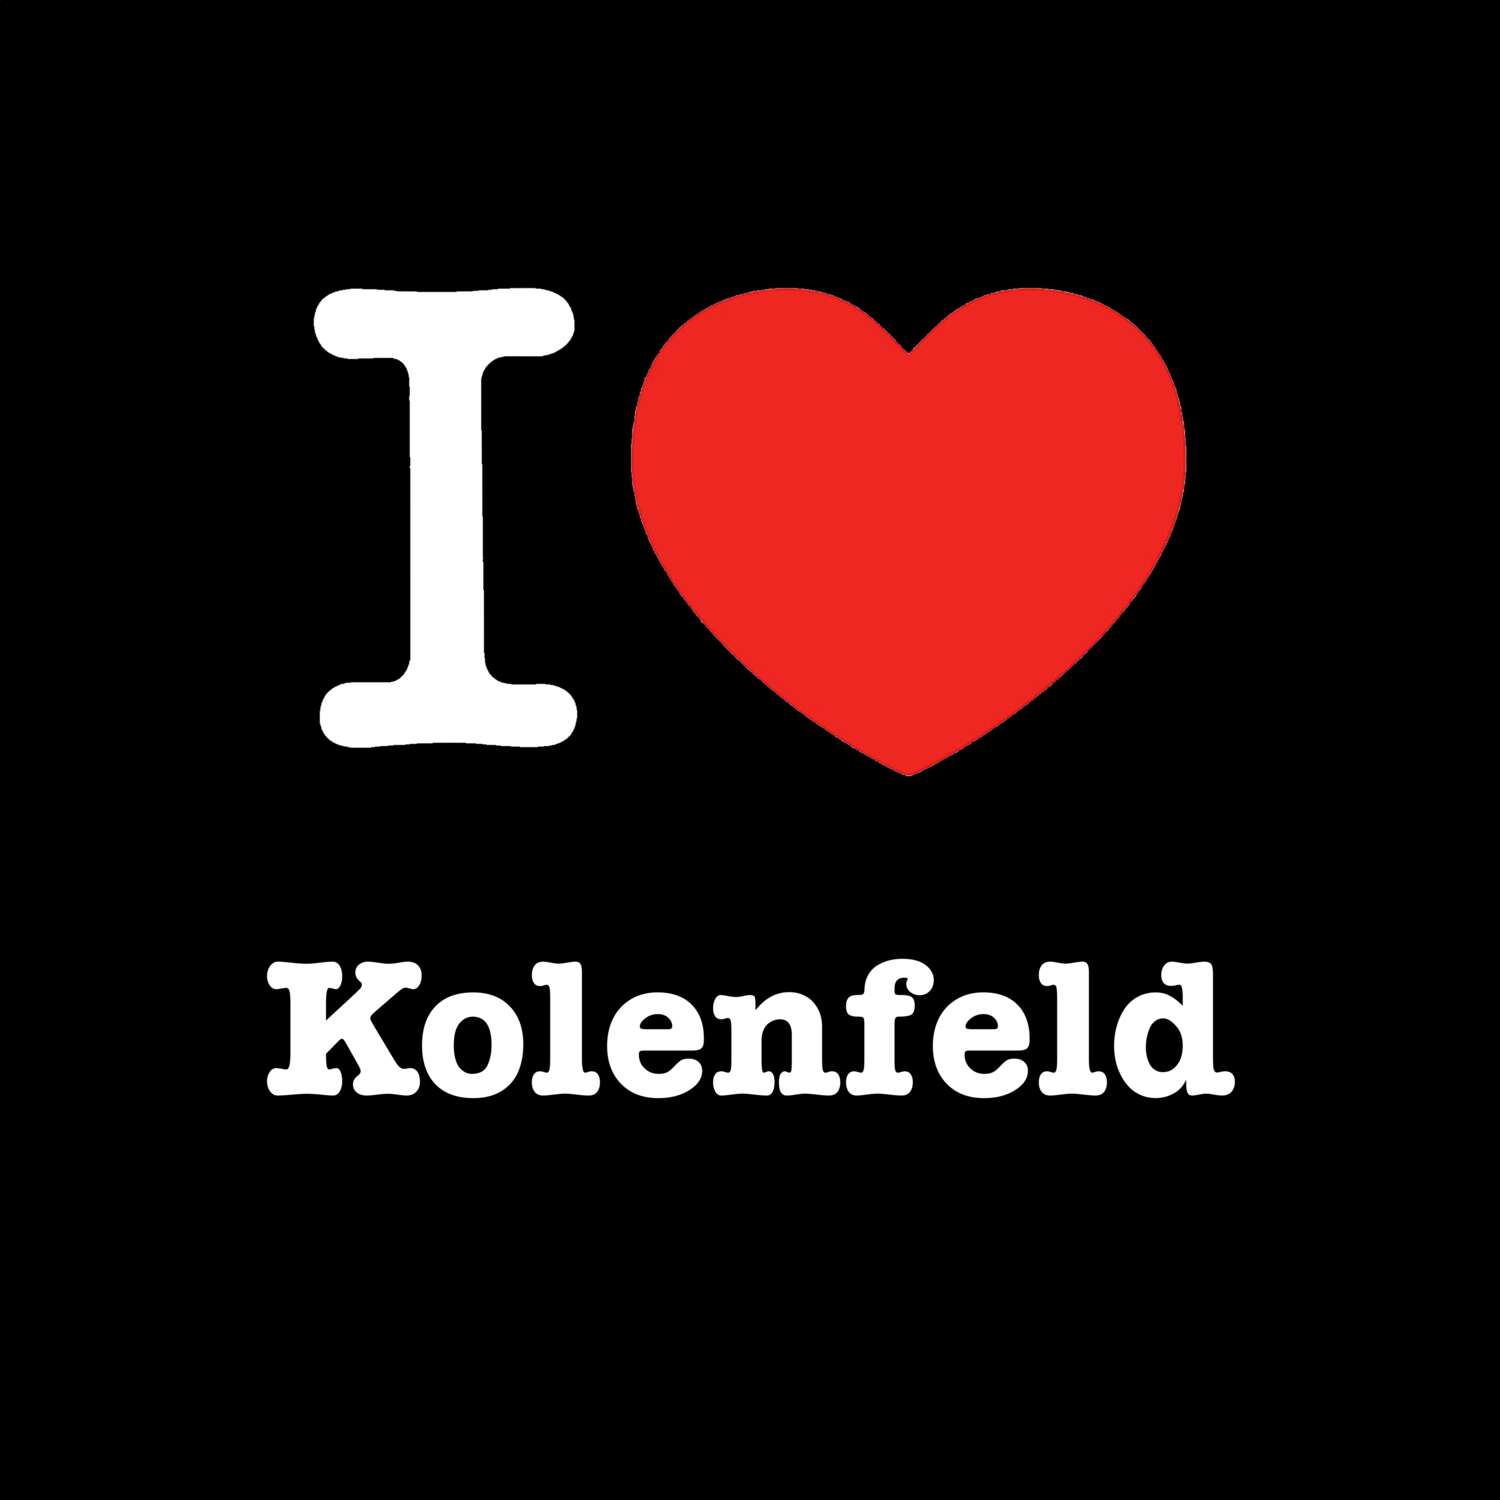 Kolenfeld T-Shirt »I love«